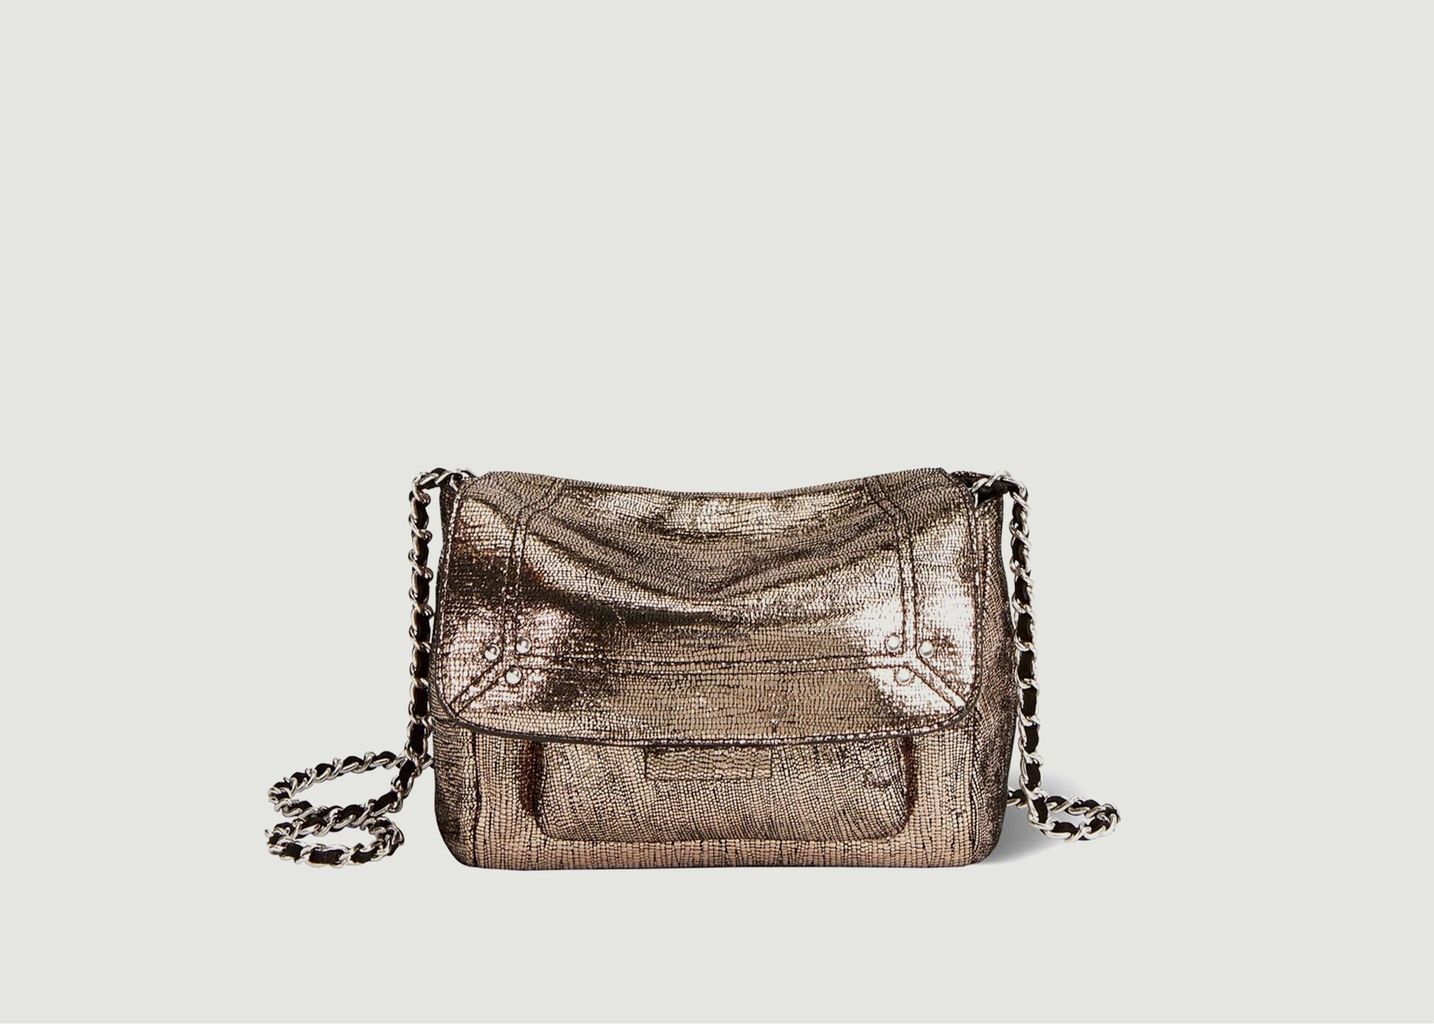 Jerome Dreyfuss Paris Lulu S Leather Shoulder Bag